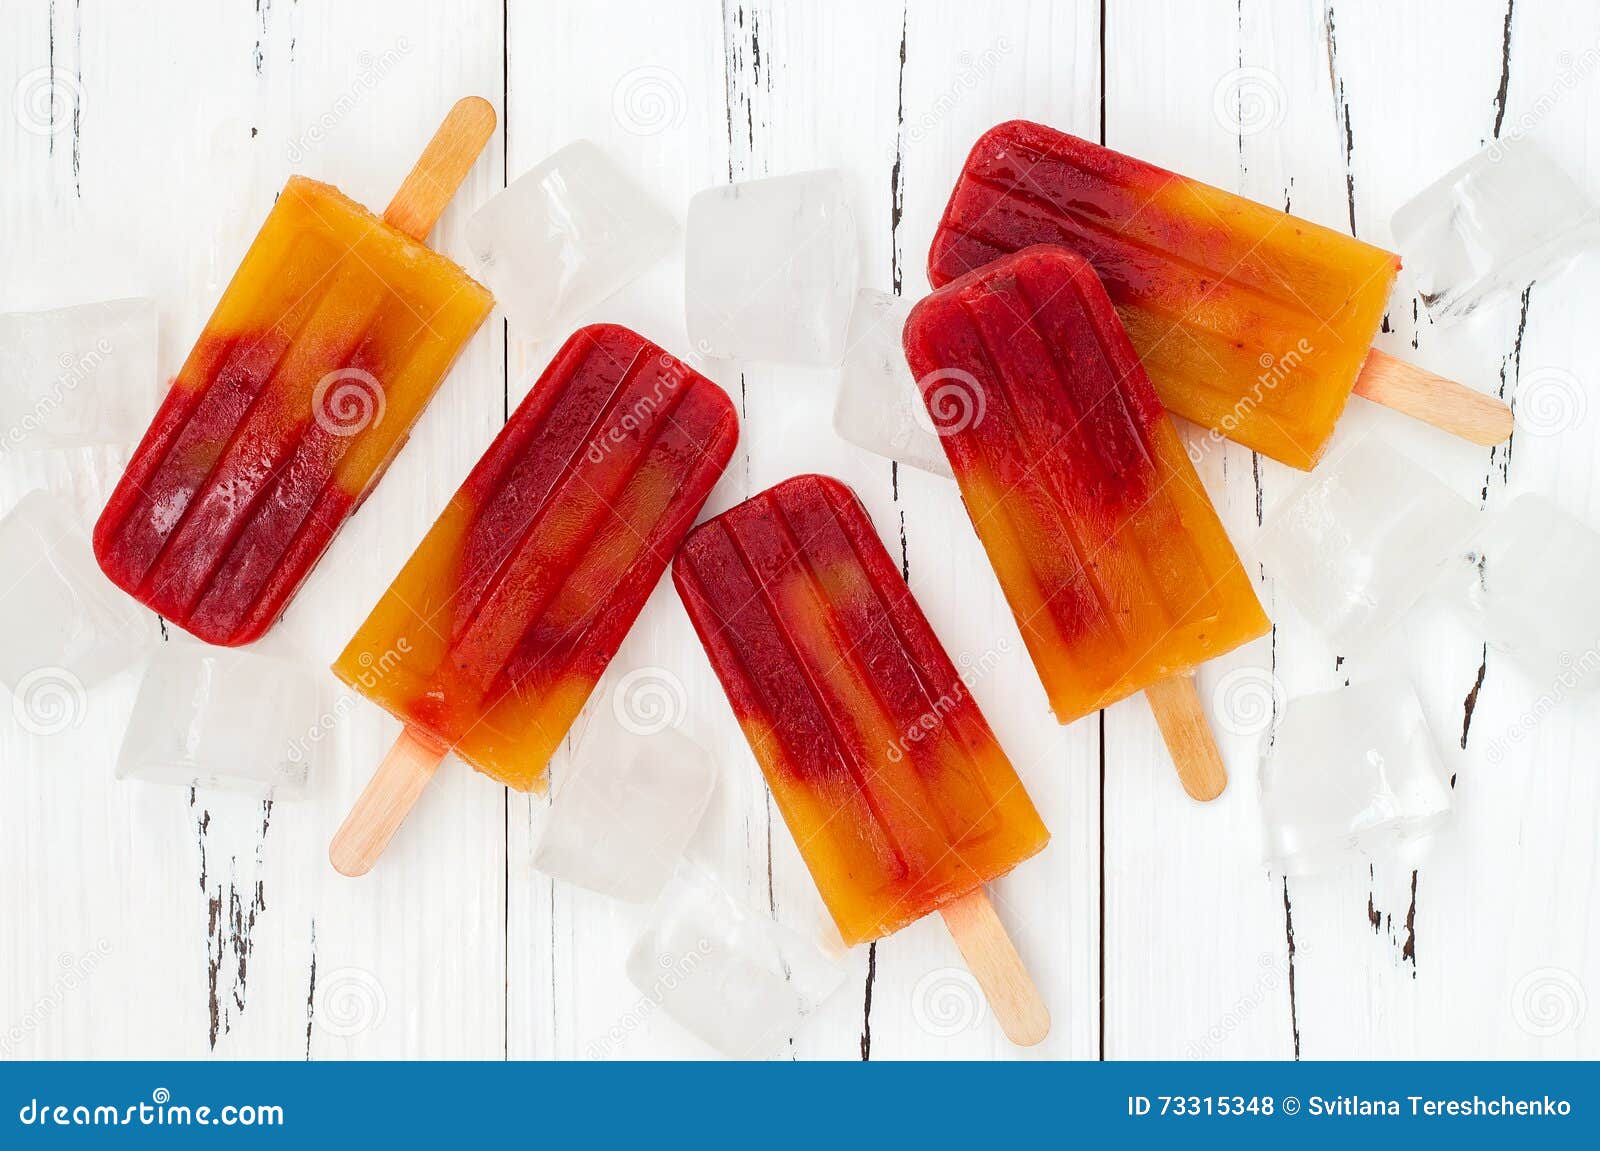 strawberry mango popsicles - ice pops - paletas.